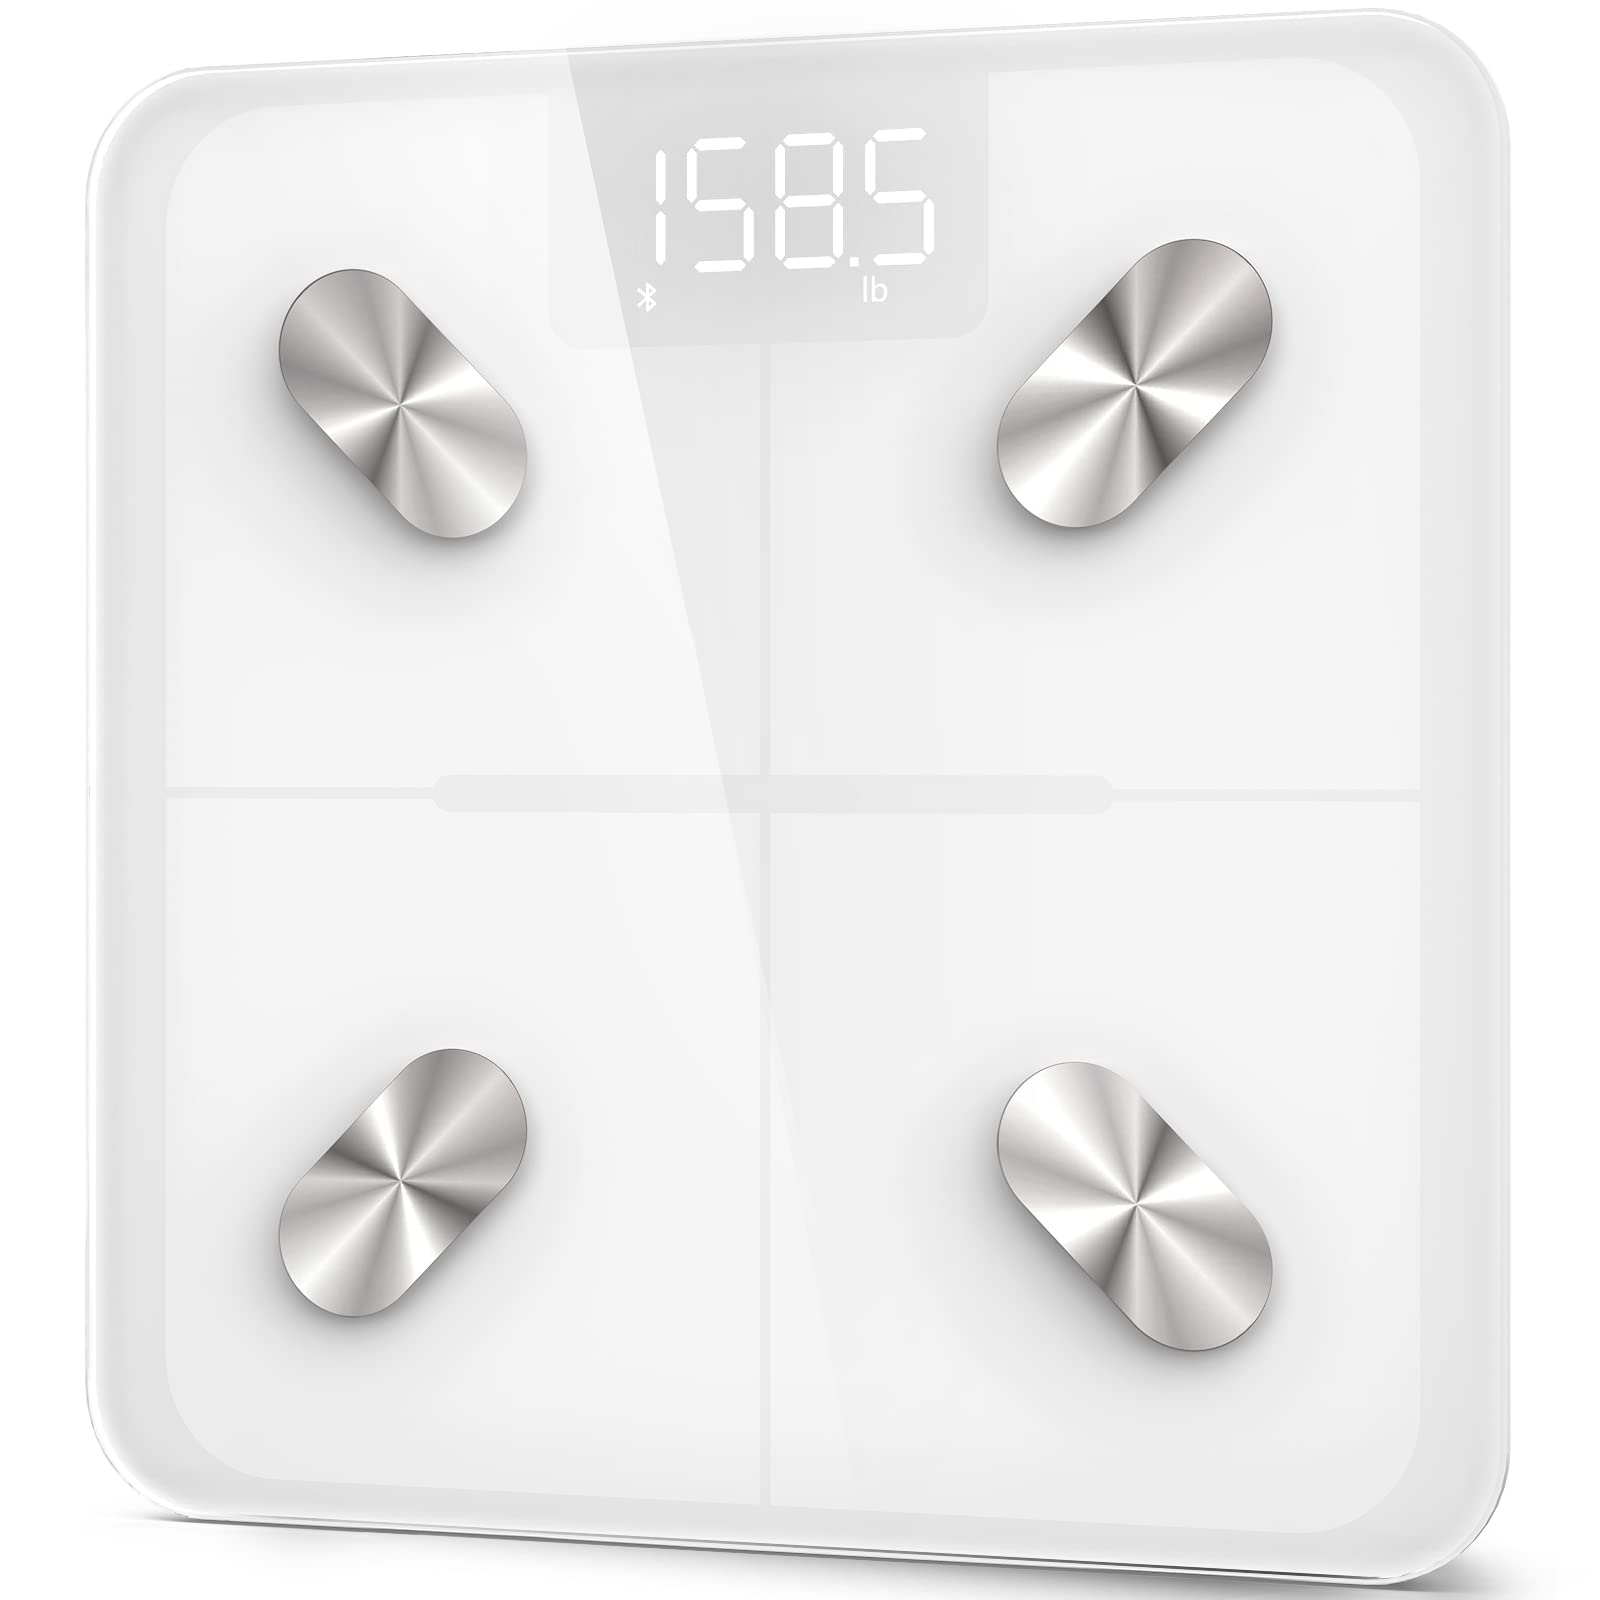 Etekcity Bathroom Scale for Body Weight, Digital Weighing Machine